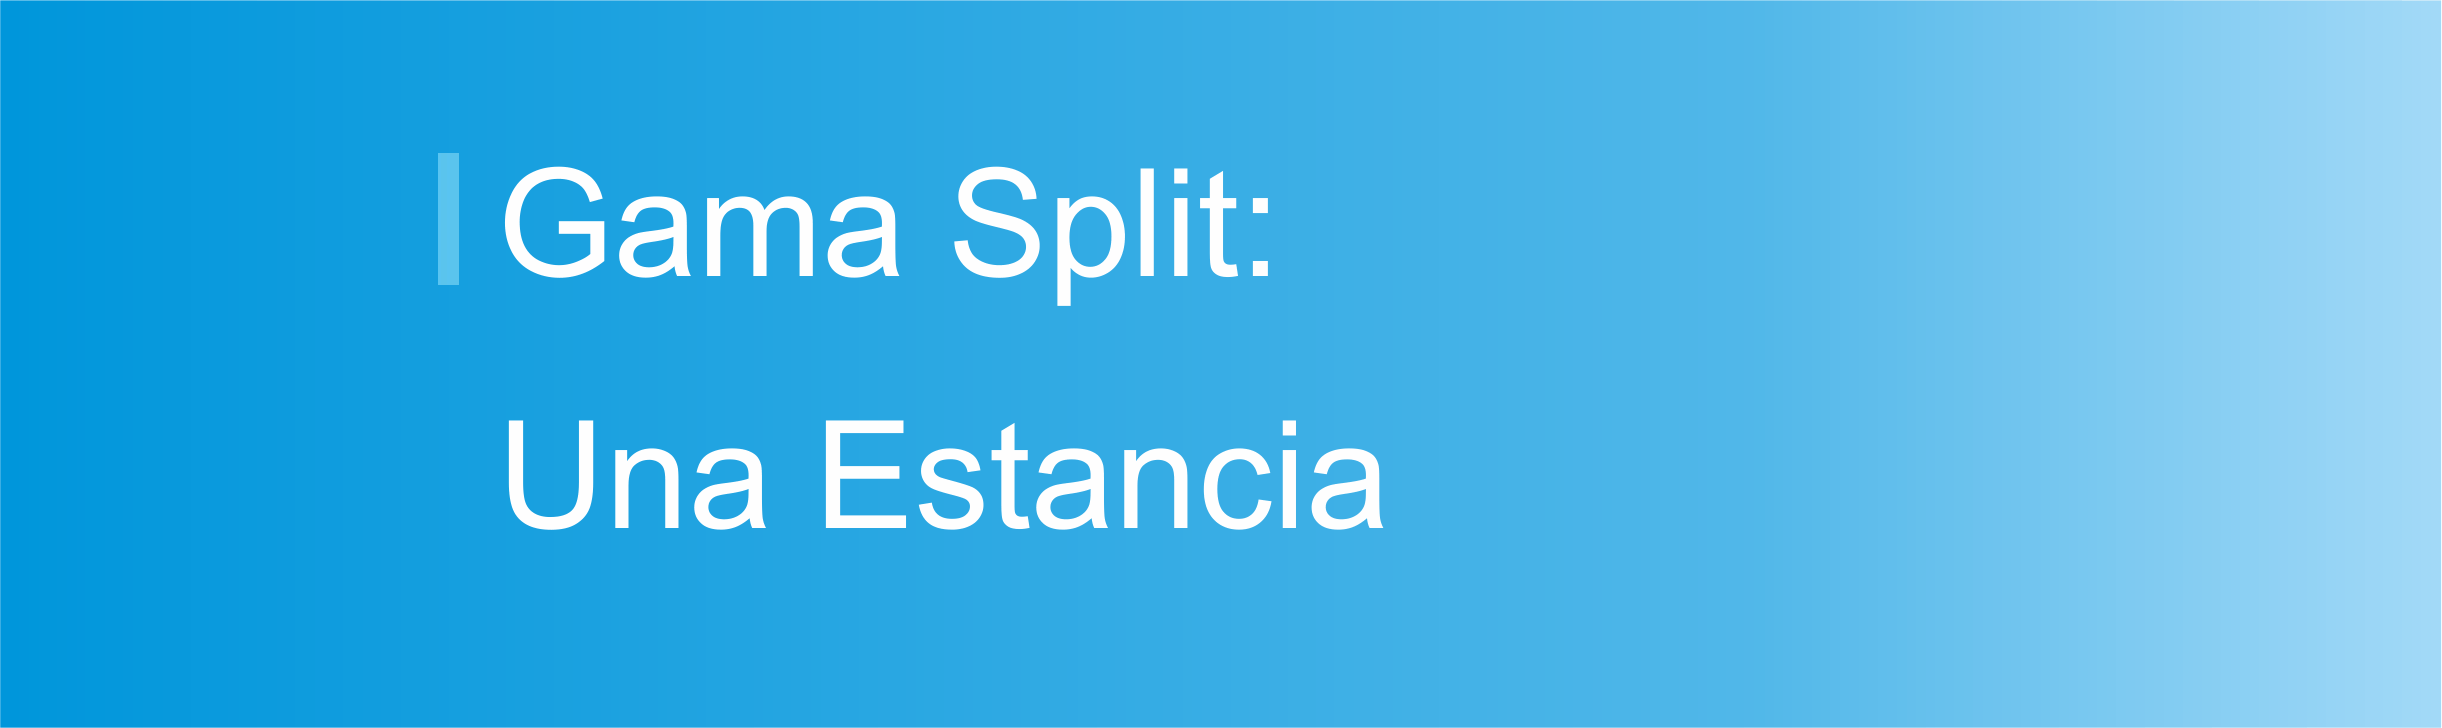 Gama Split - Una Estancia